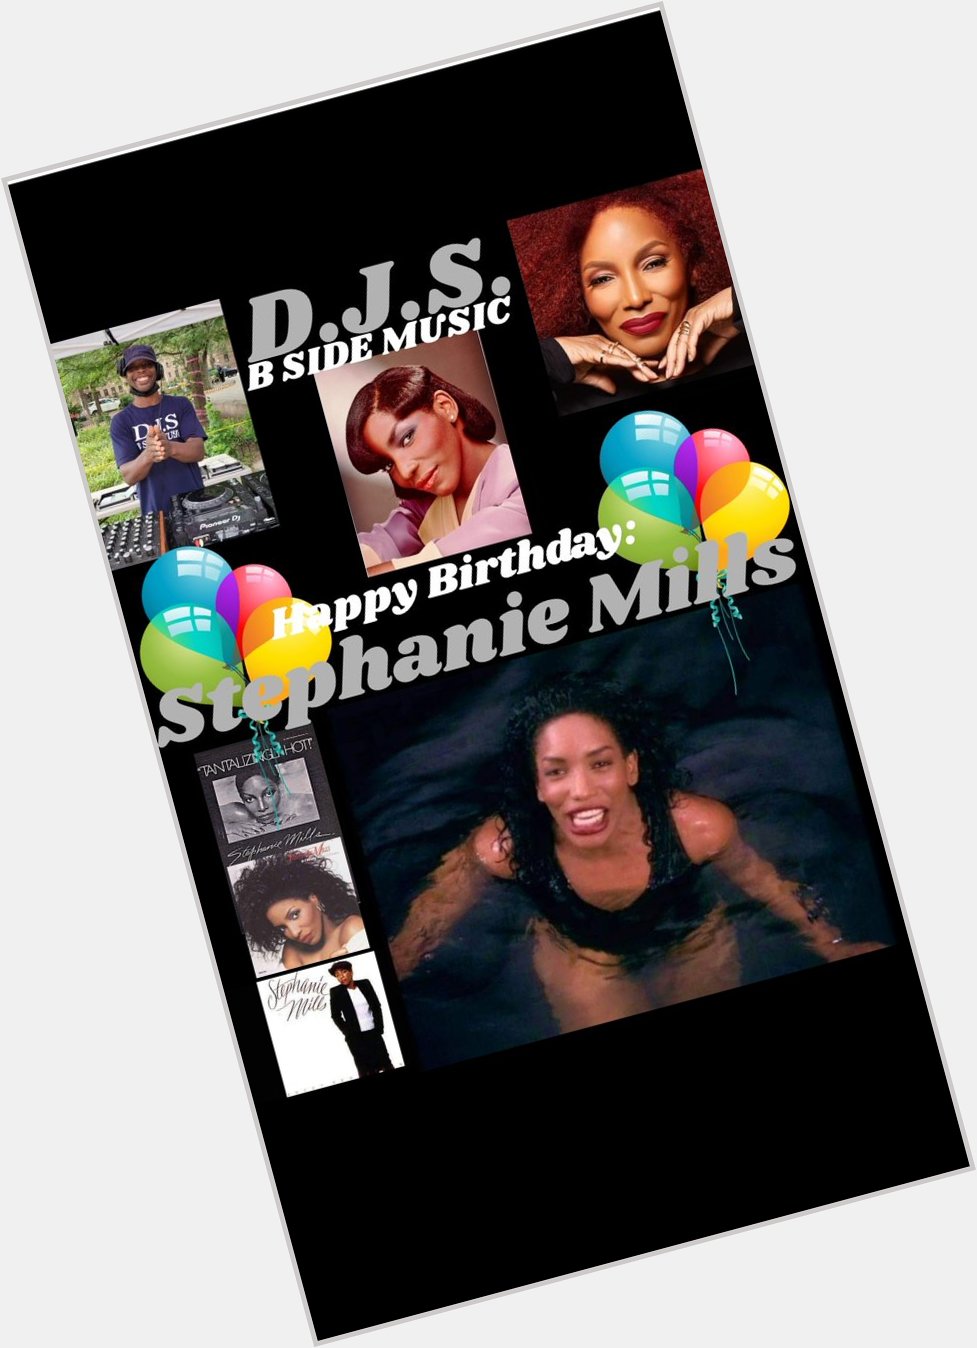 I(D.J.S.)\"B SIDE MUSIC\" wish Songstress/Actress: \"STEPHANIE MILLS\" Happy Birthday!!!! 